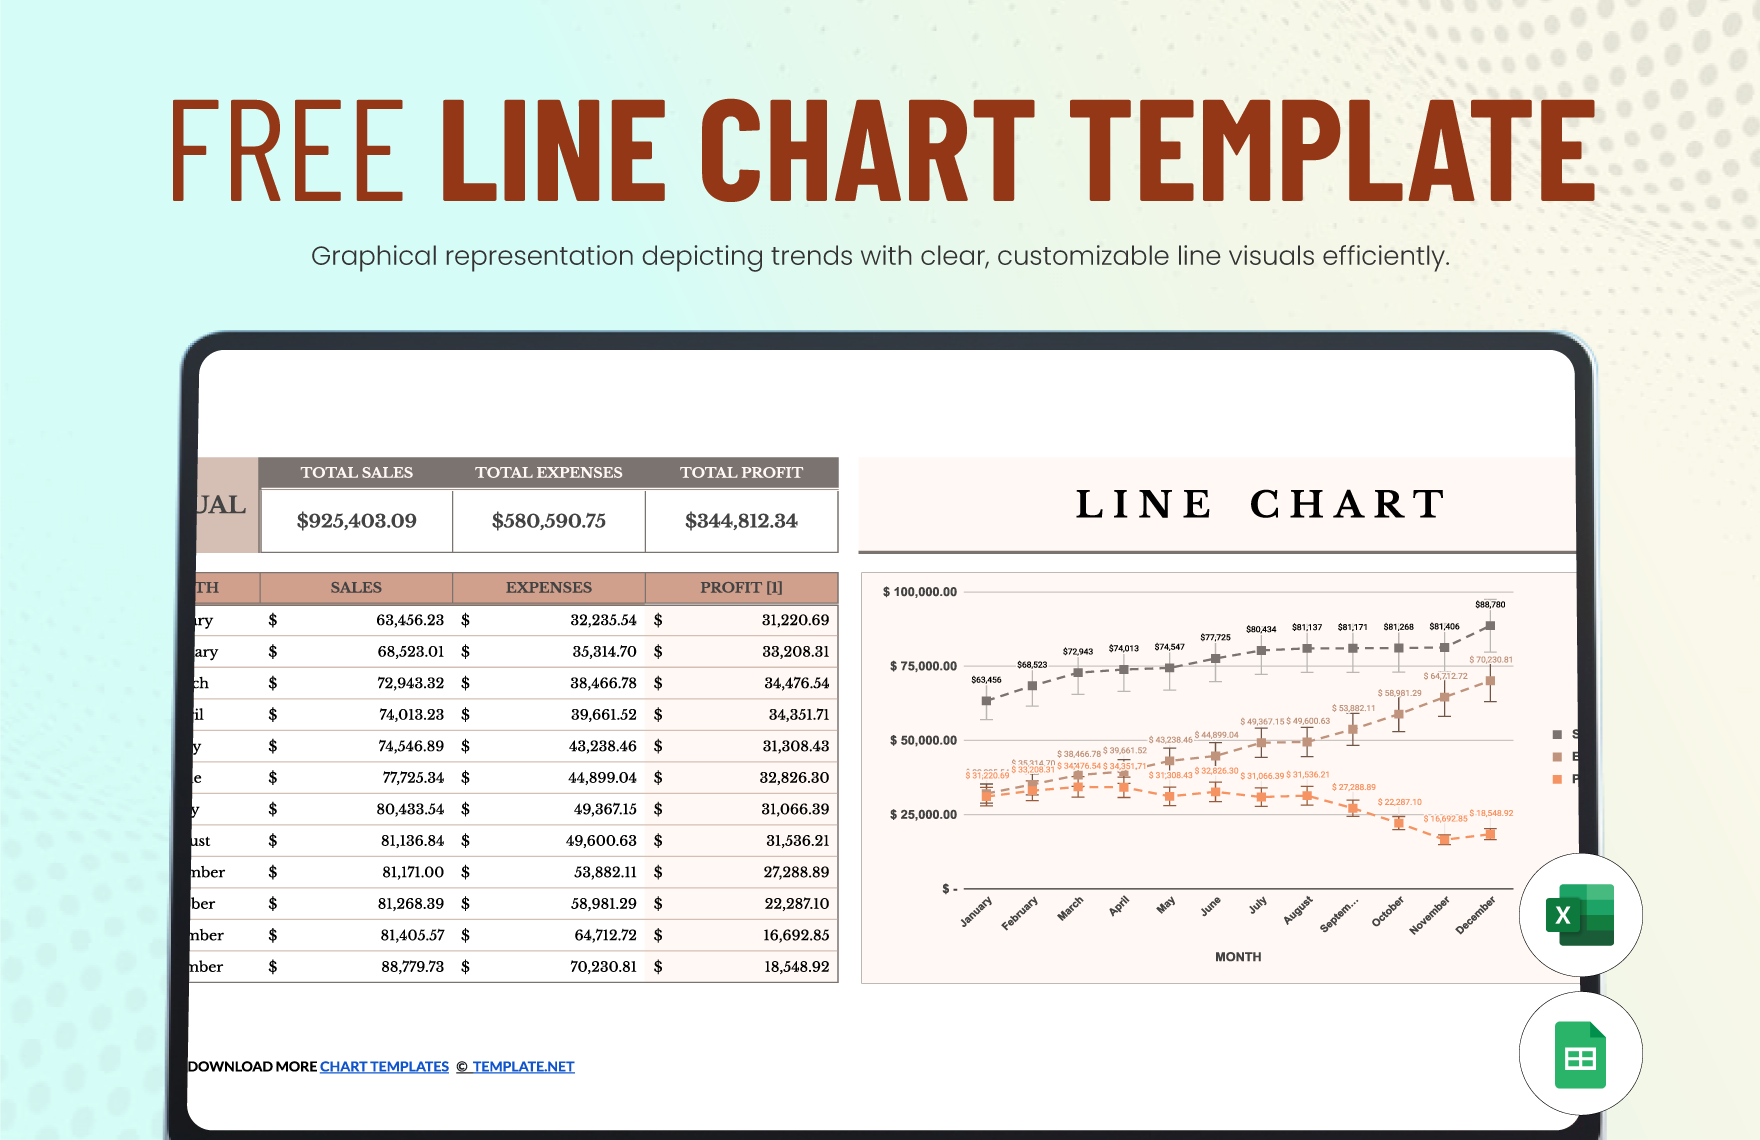 Line Chart Template